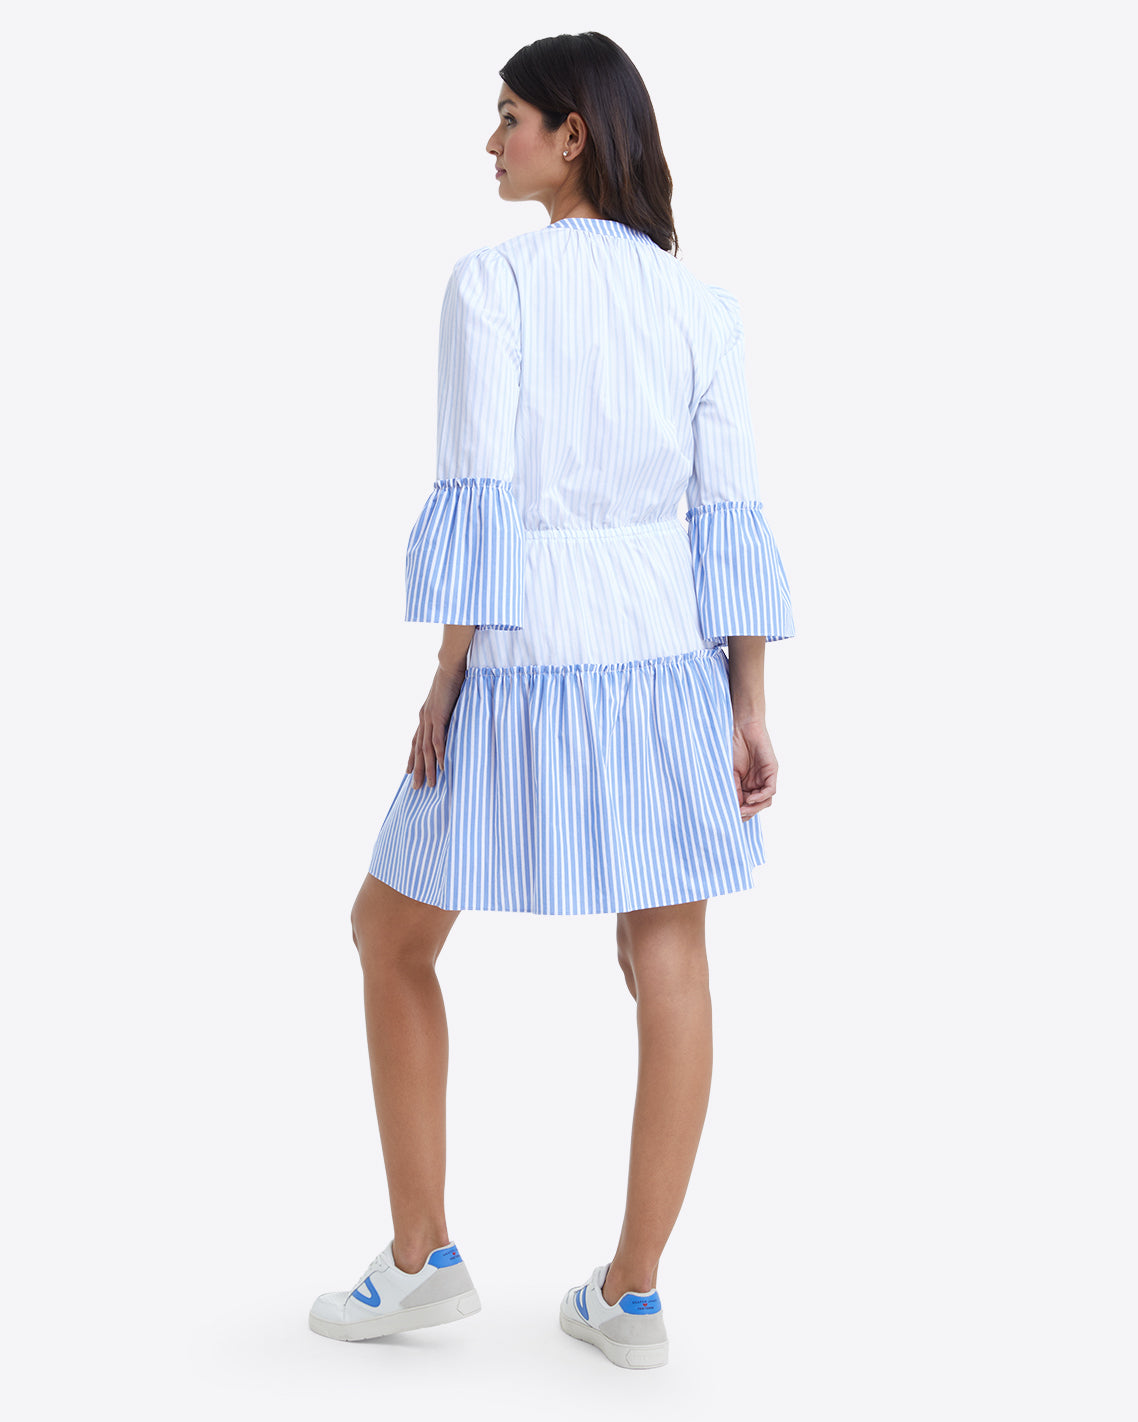 Draper James Size 10 Embroidered Dress Blue White Striped Cotton A